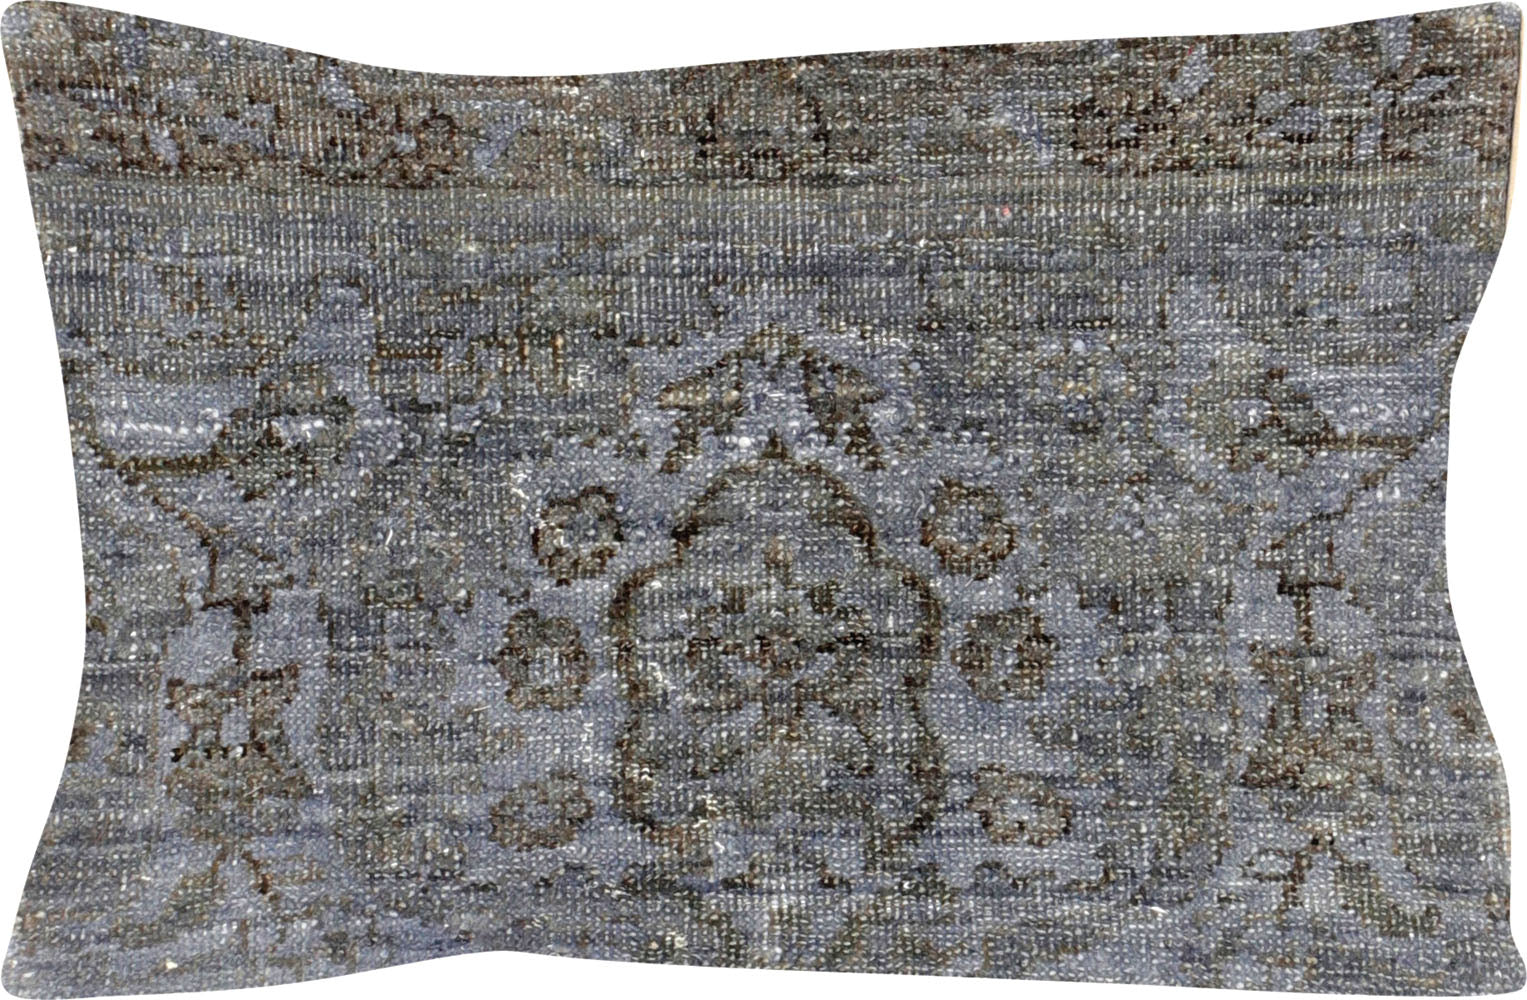 Vintage Persian Tabriz Pillow - 16" x 24"